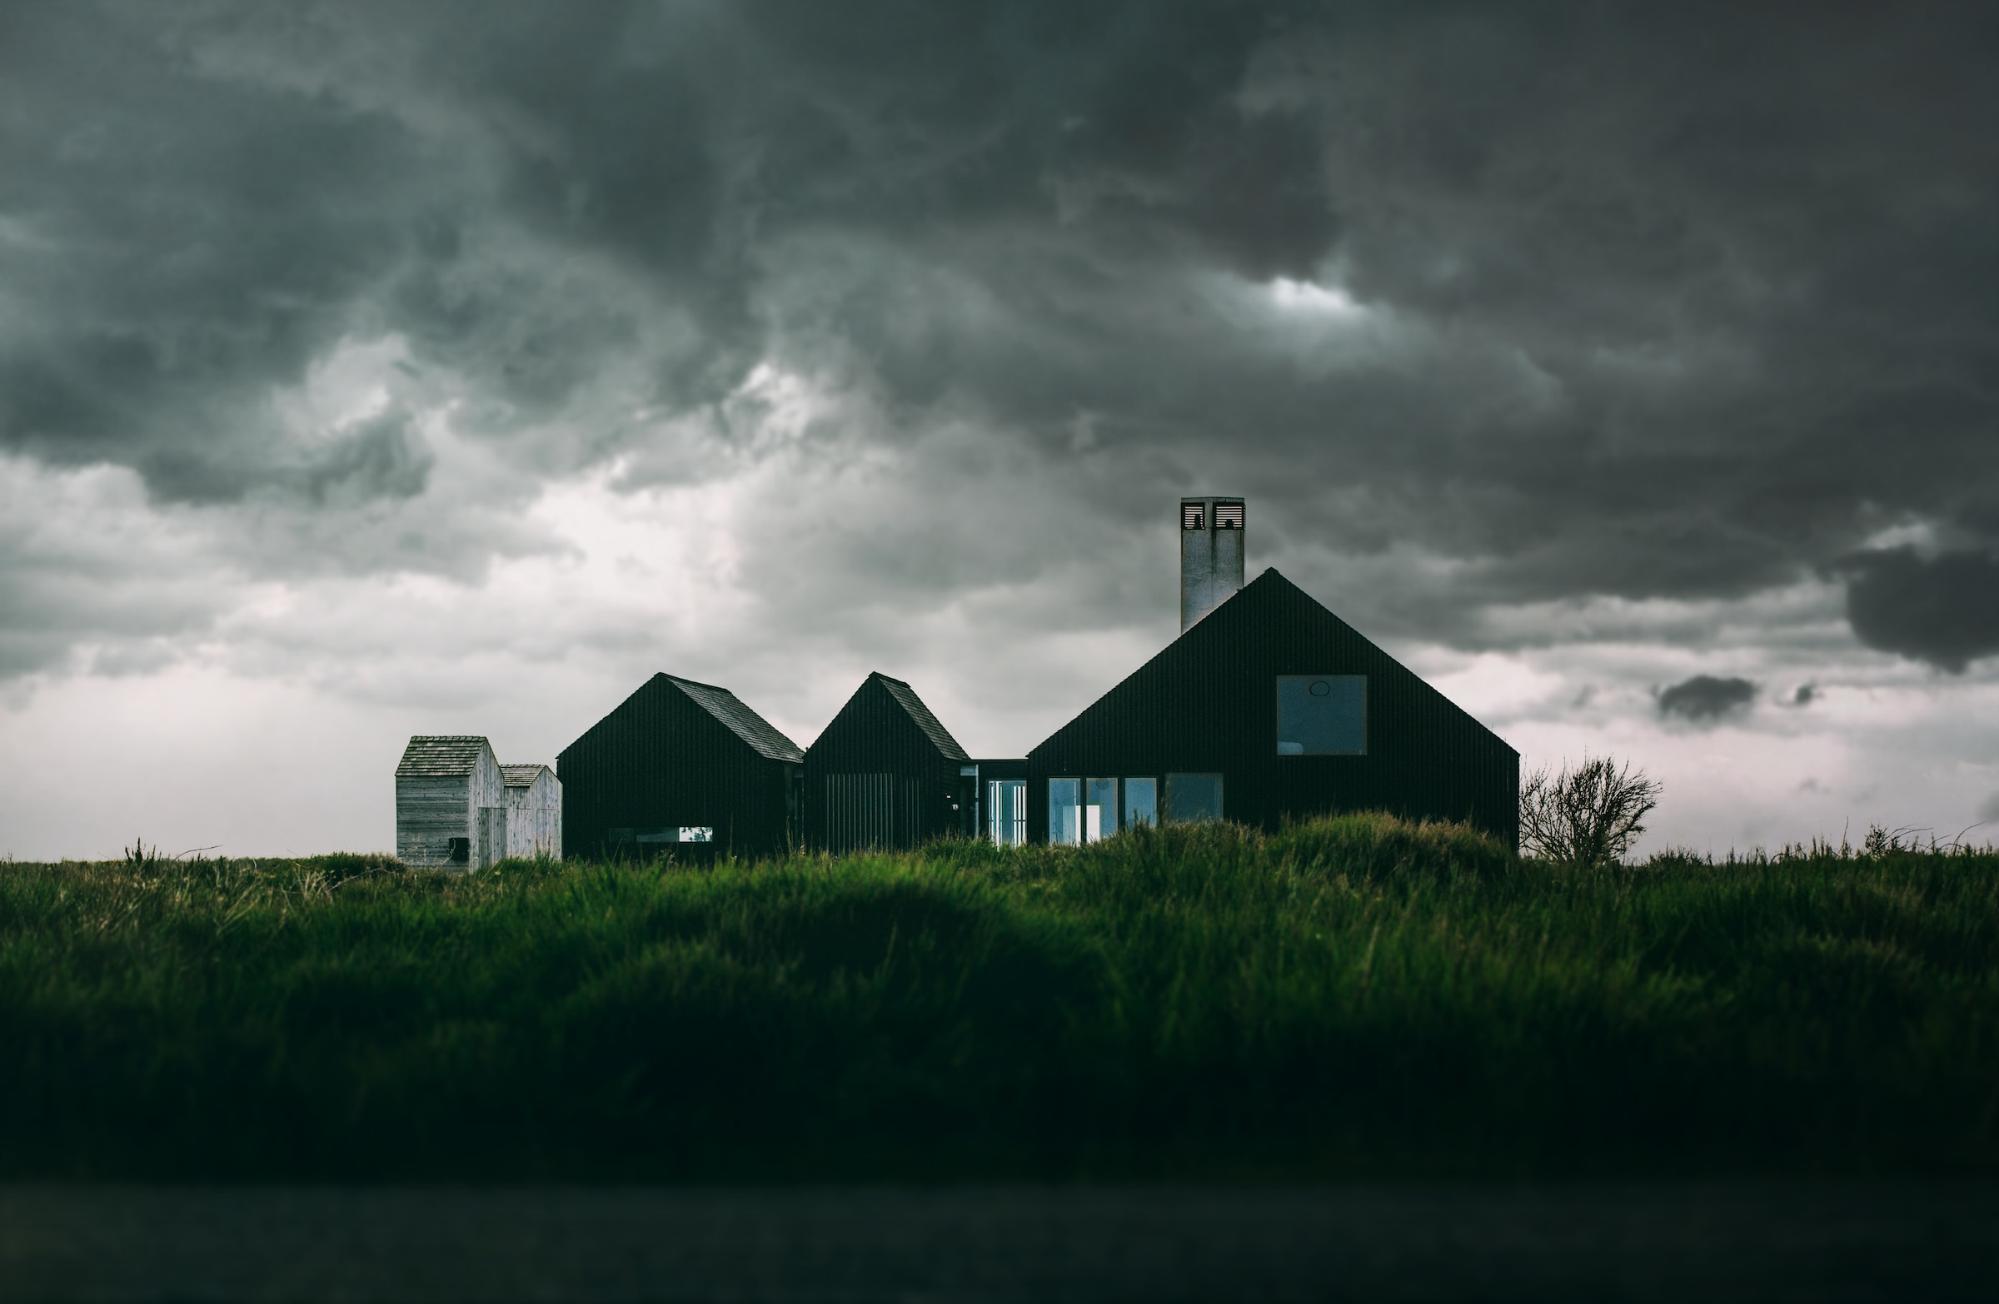 A house standing in green grass under dark clouds